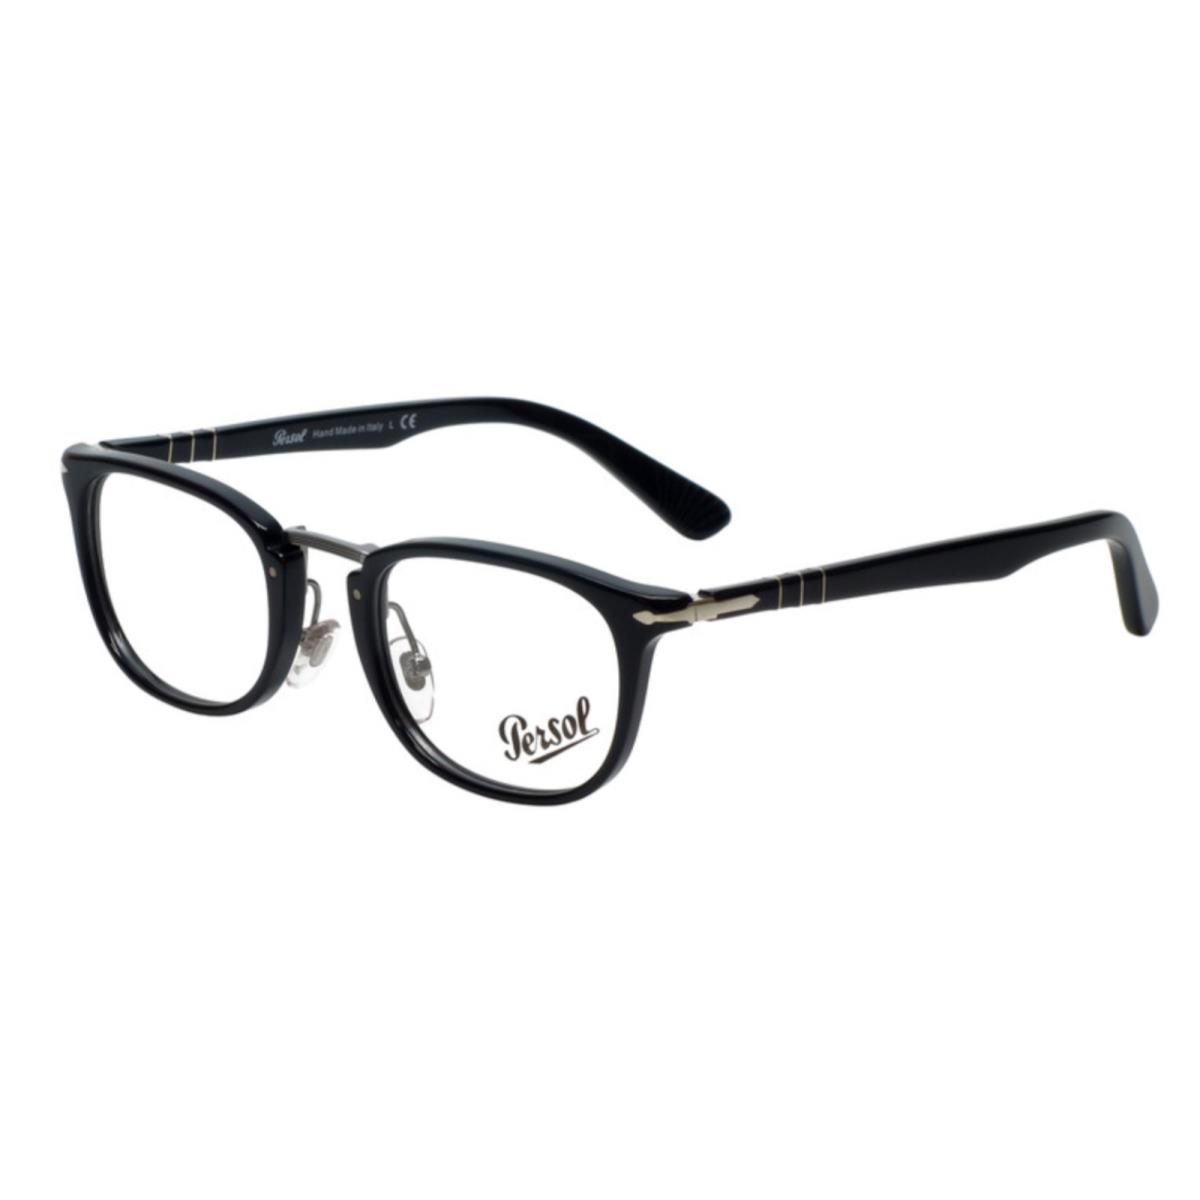 Persol Typewriter Edition Eyeglasses 3126-V 95 50-22 Black Silver Frames